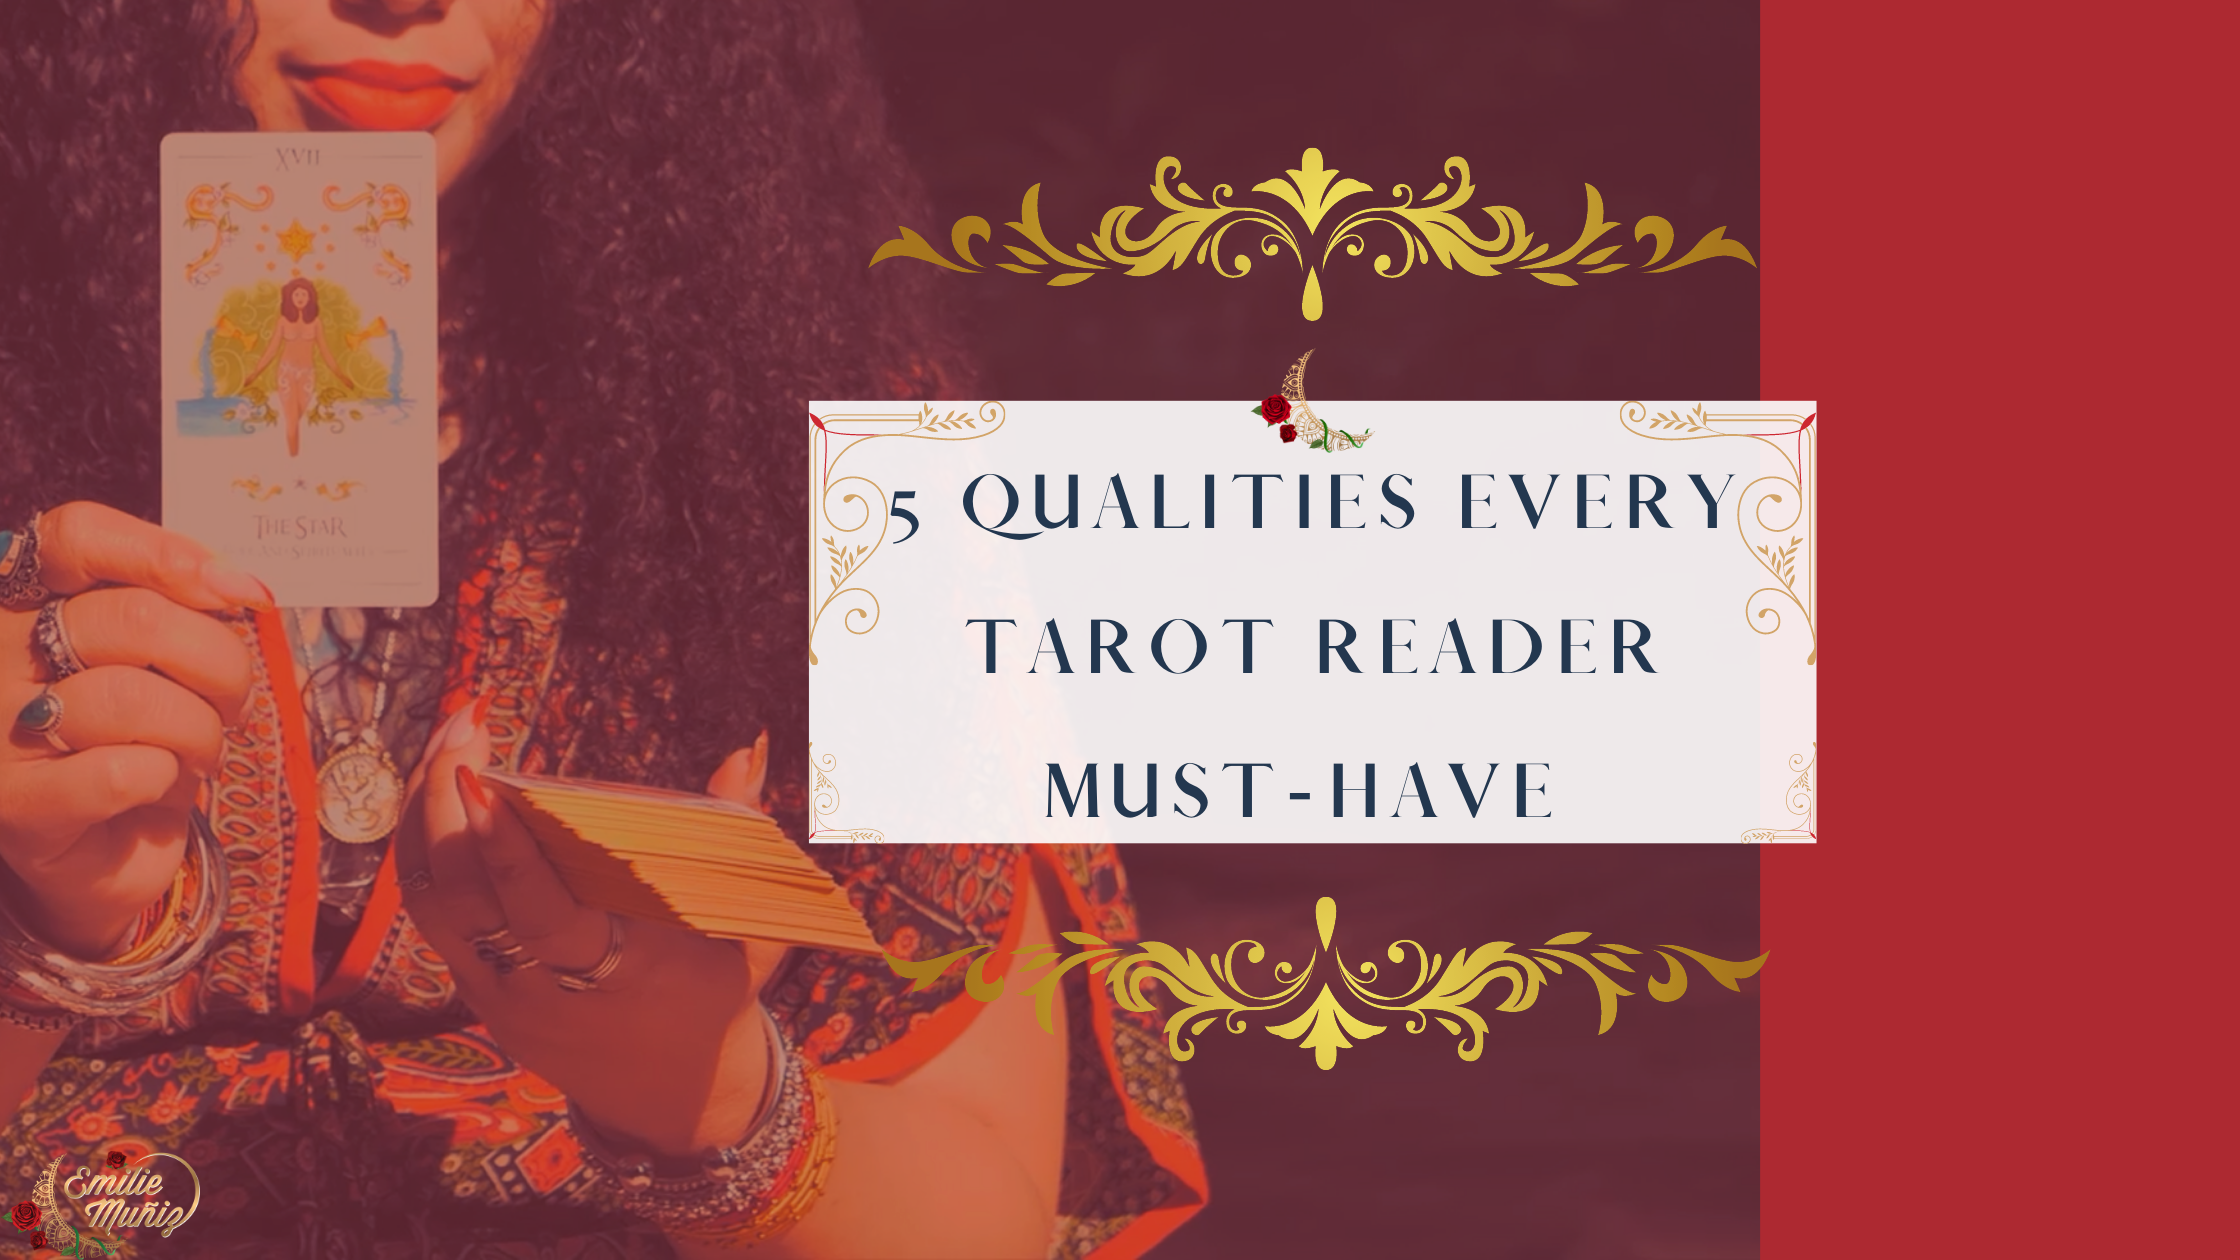 Tarot Reader reading qualities blog article image